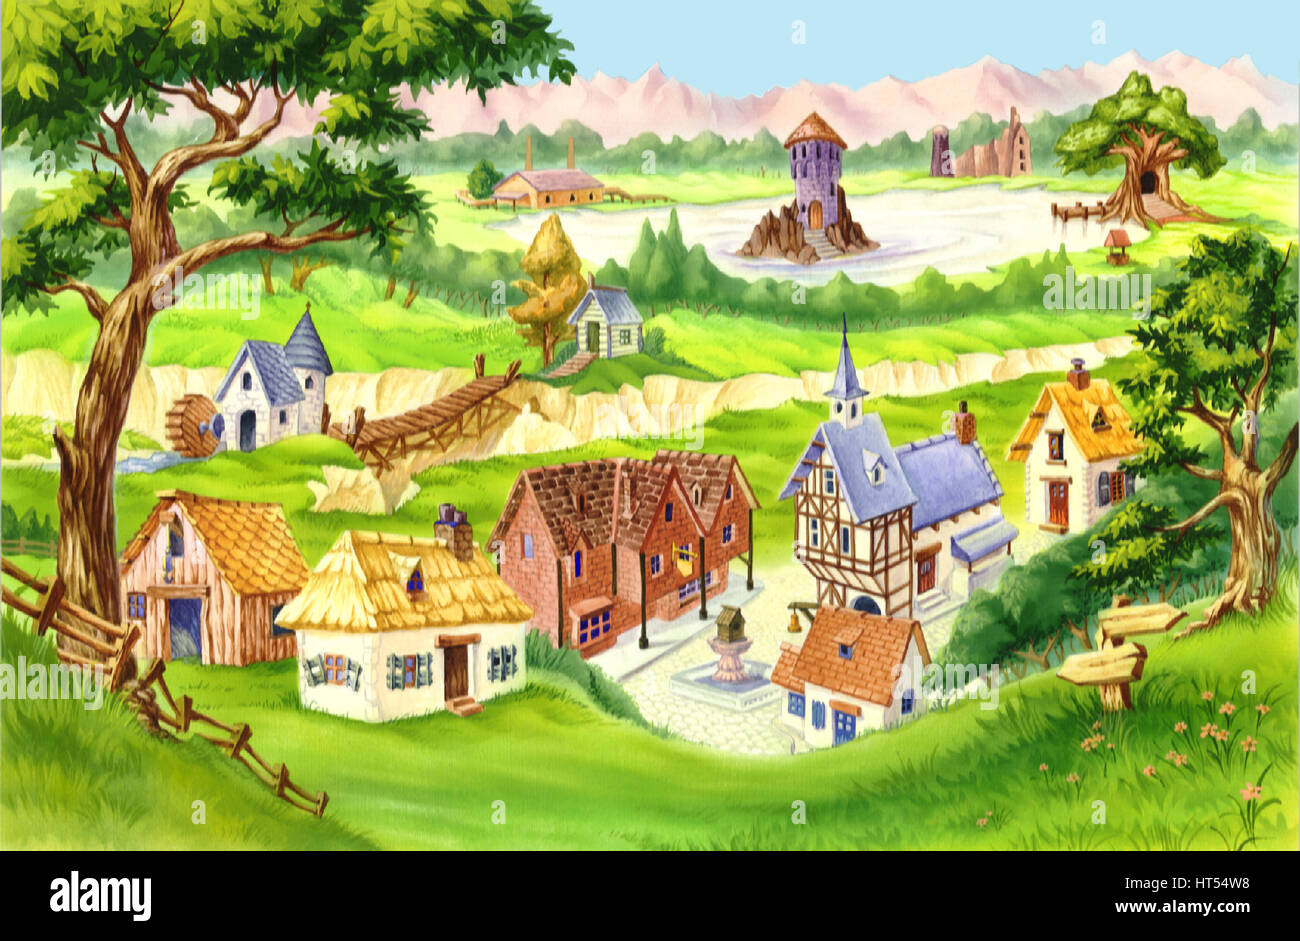 Fairytale Village. Digital Painting Background, Illustration in cartoon  style character Stock Photo - Alamy